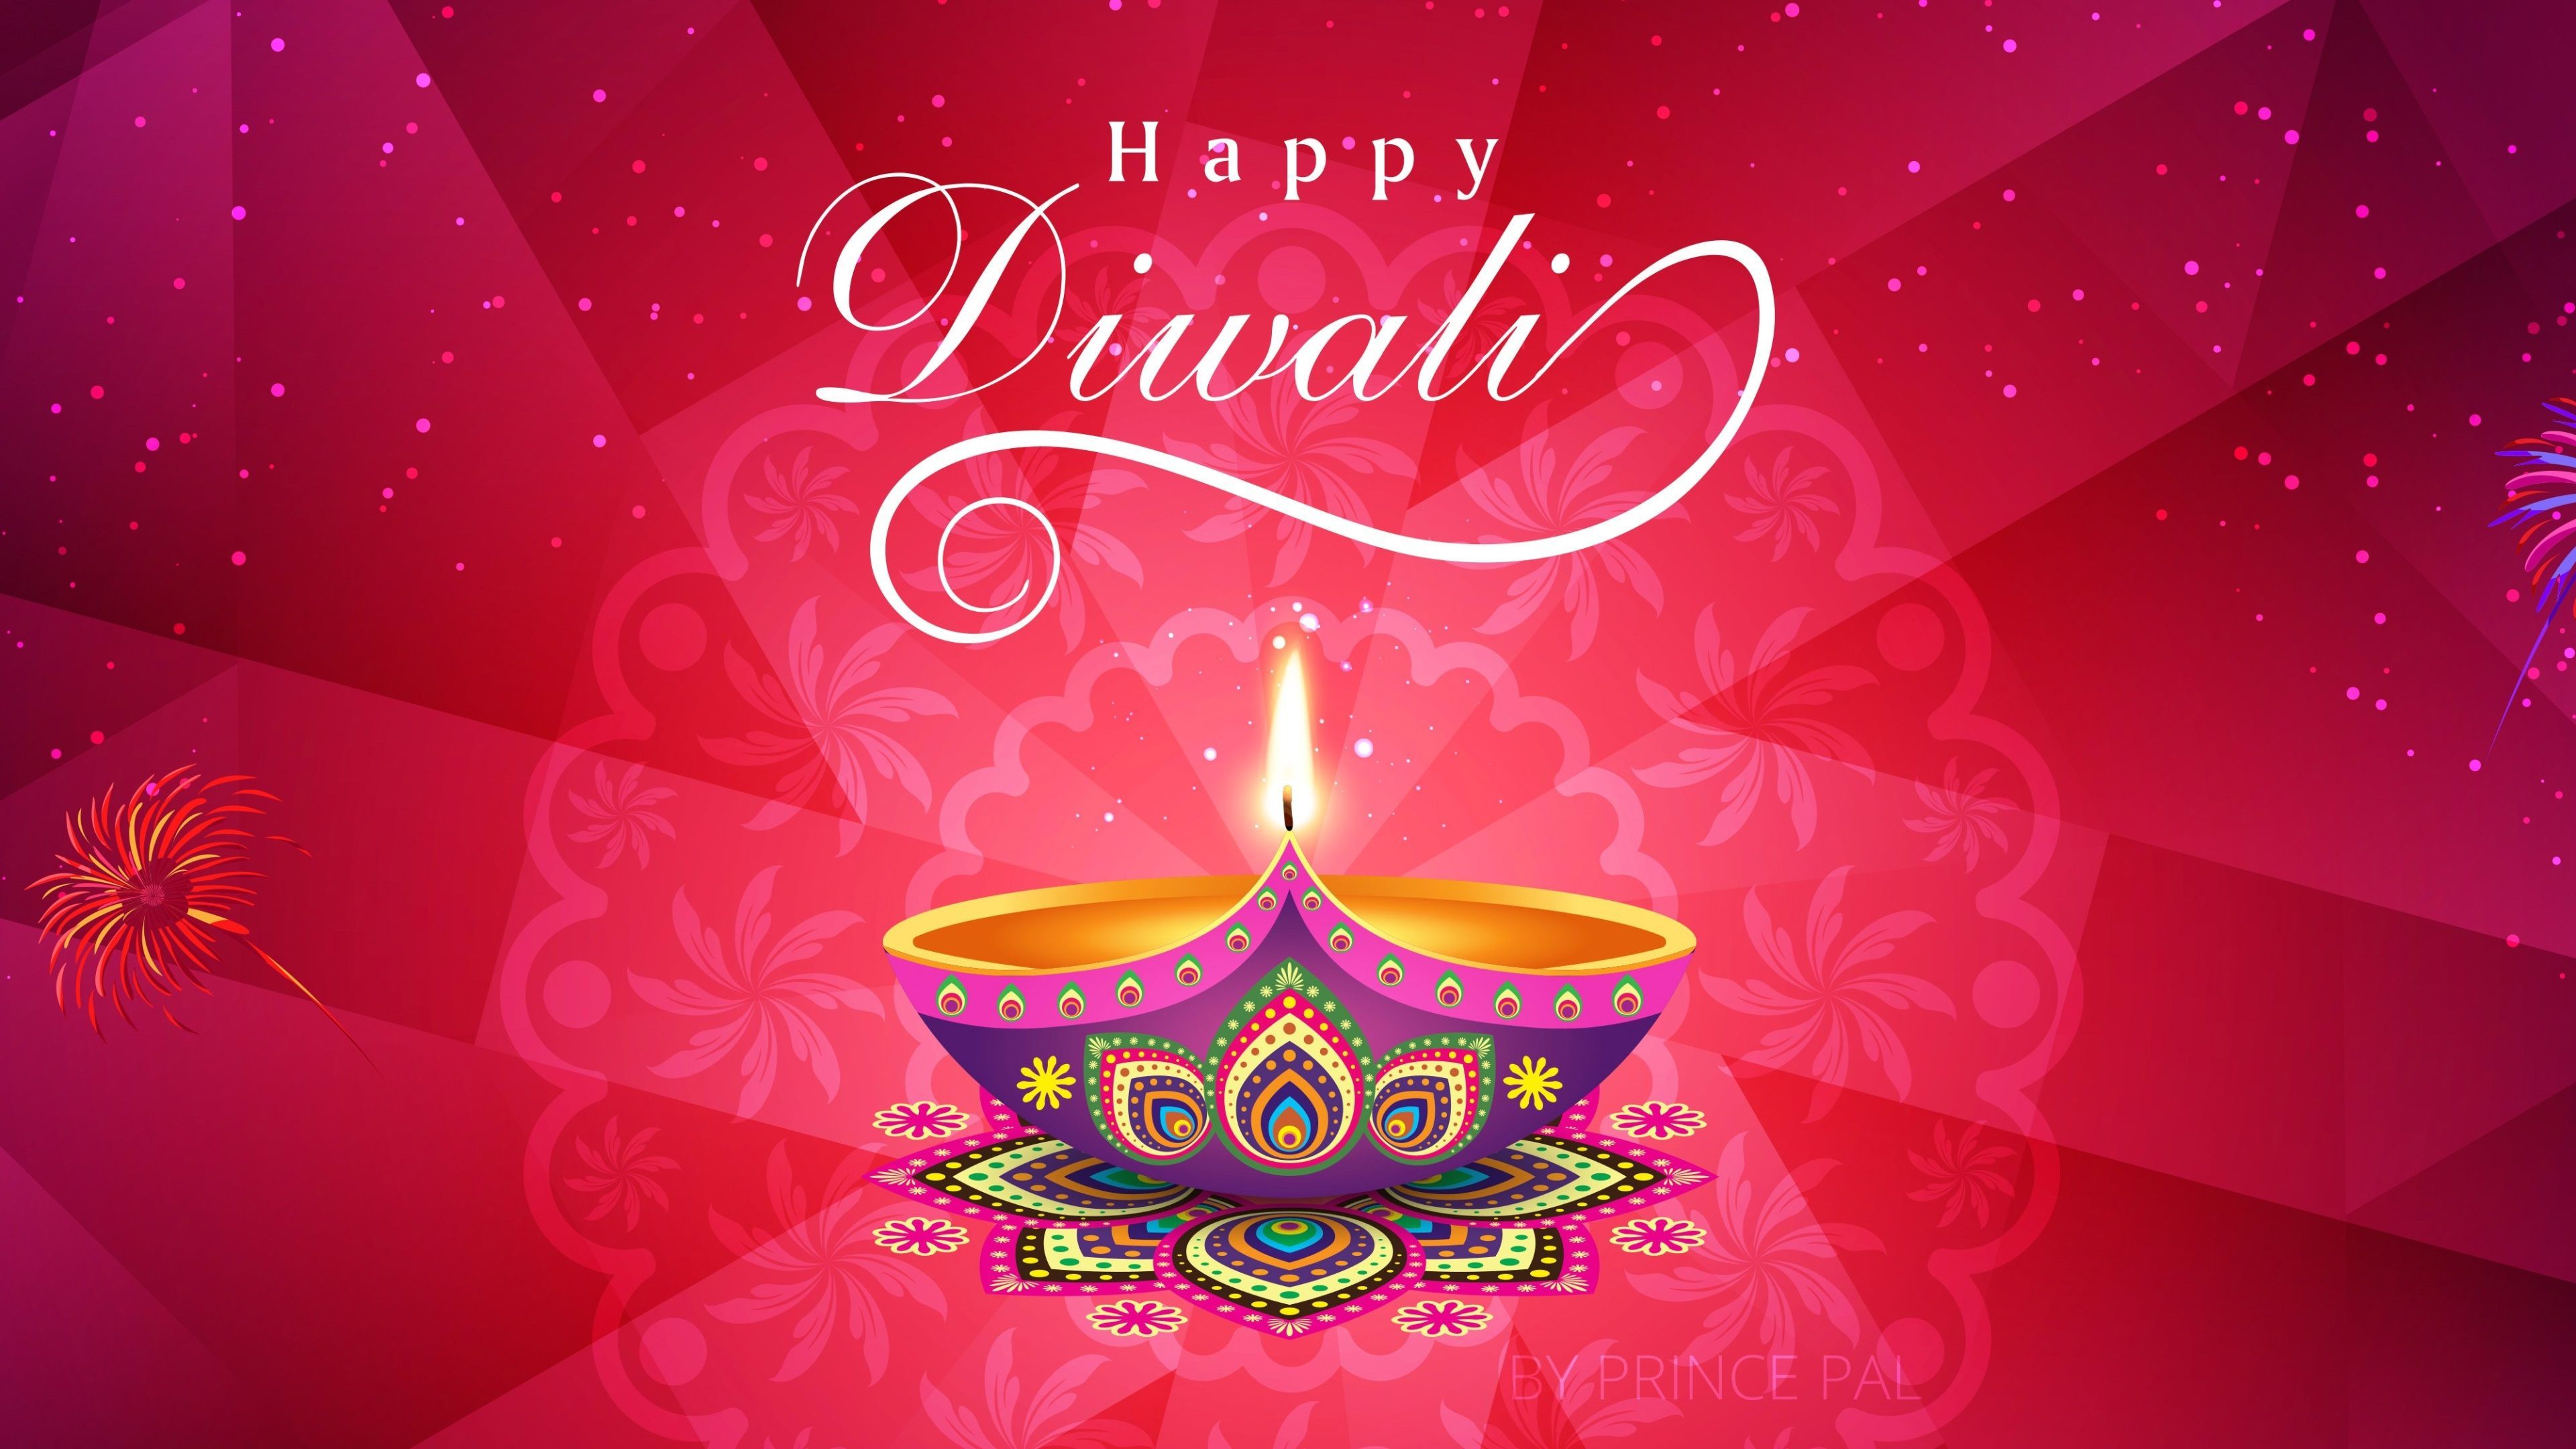 1920x1200 happy diwali wallpaper for pc in HD. Holiday. Tokkoro.com Amazing HD Wallpaper. Happy diwali image, Happy diwali, Diwali wishes